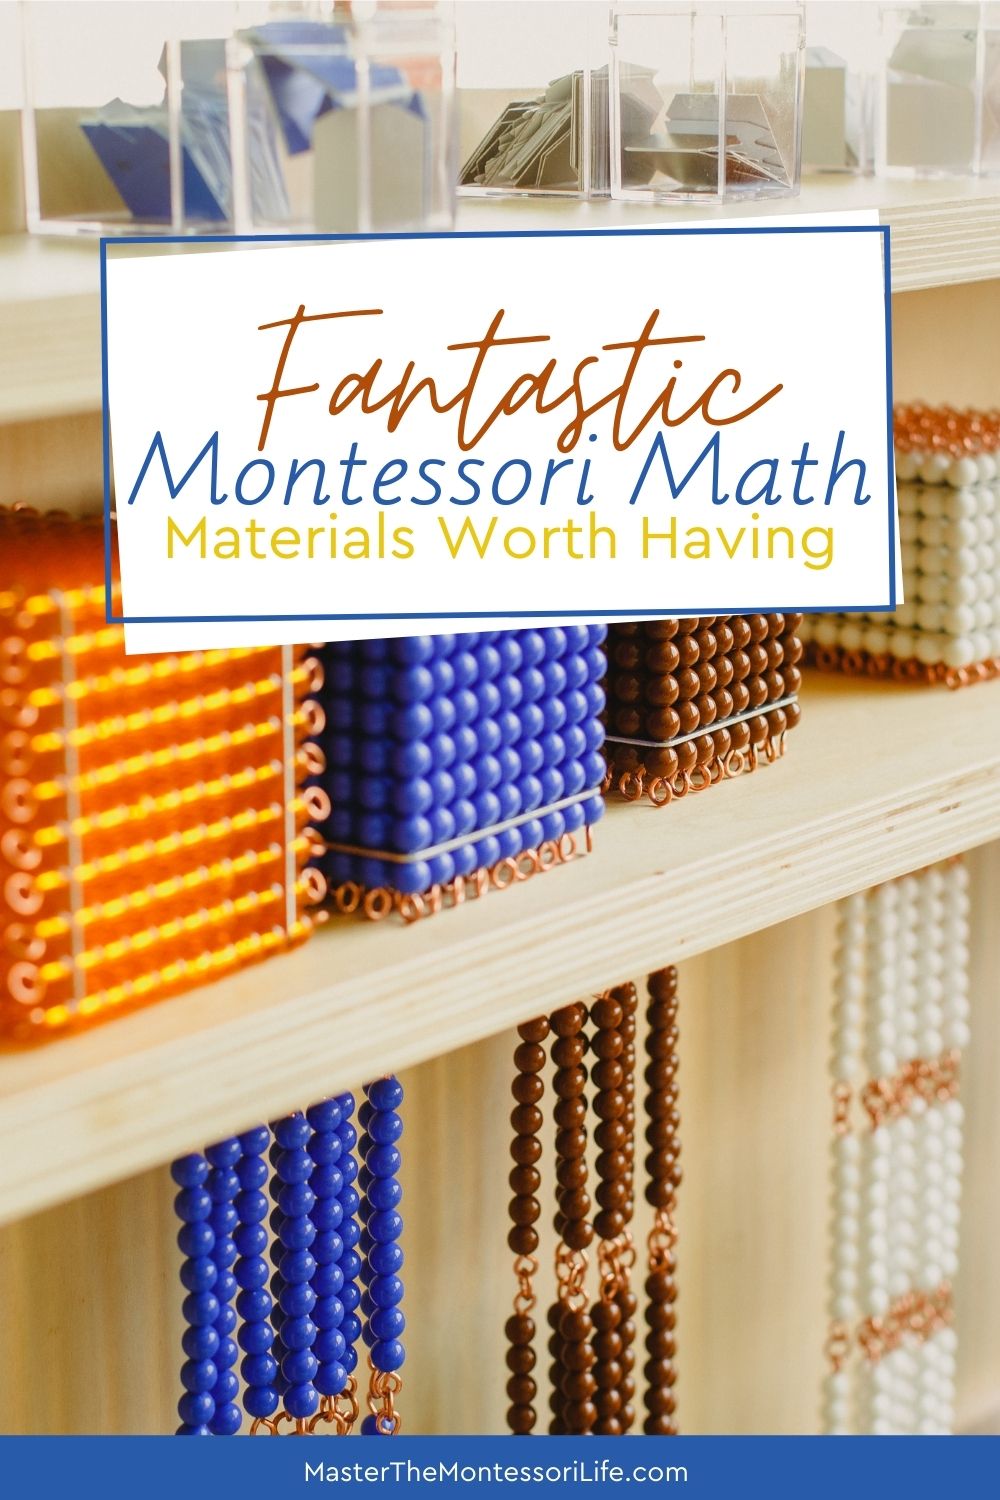 Preschool Learning Activities - Montessori Math and Language Works